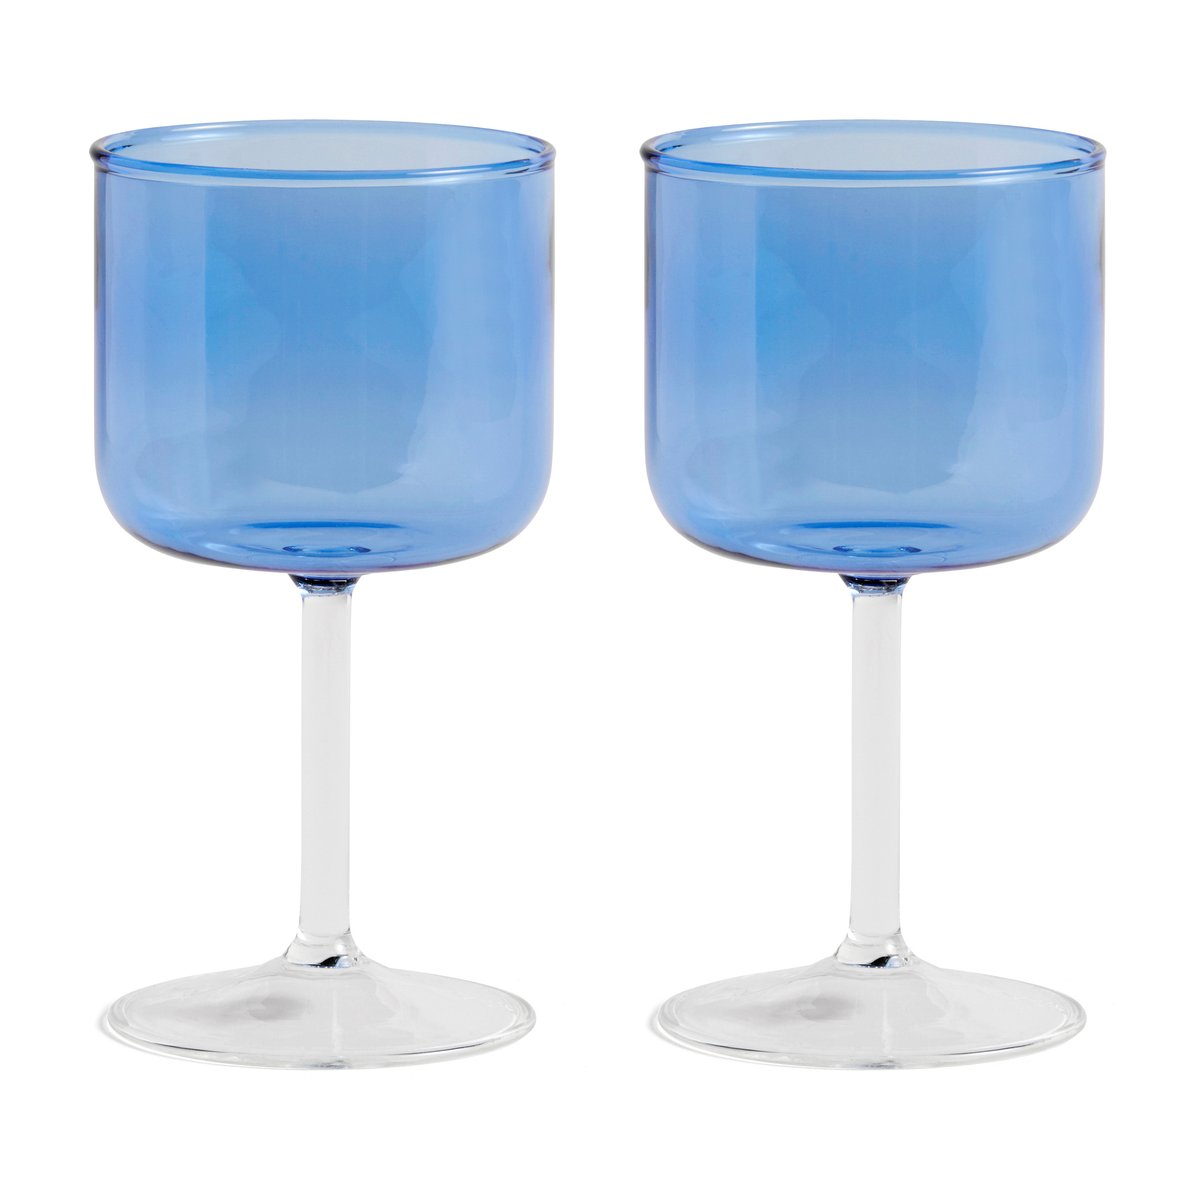 hay verre à vin tint 25 cl lot de 2 bleu-transparent